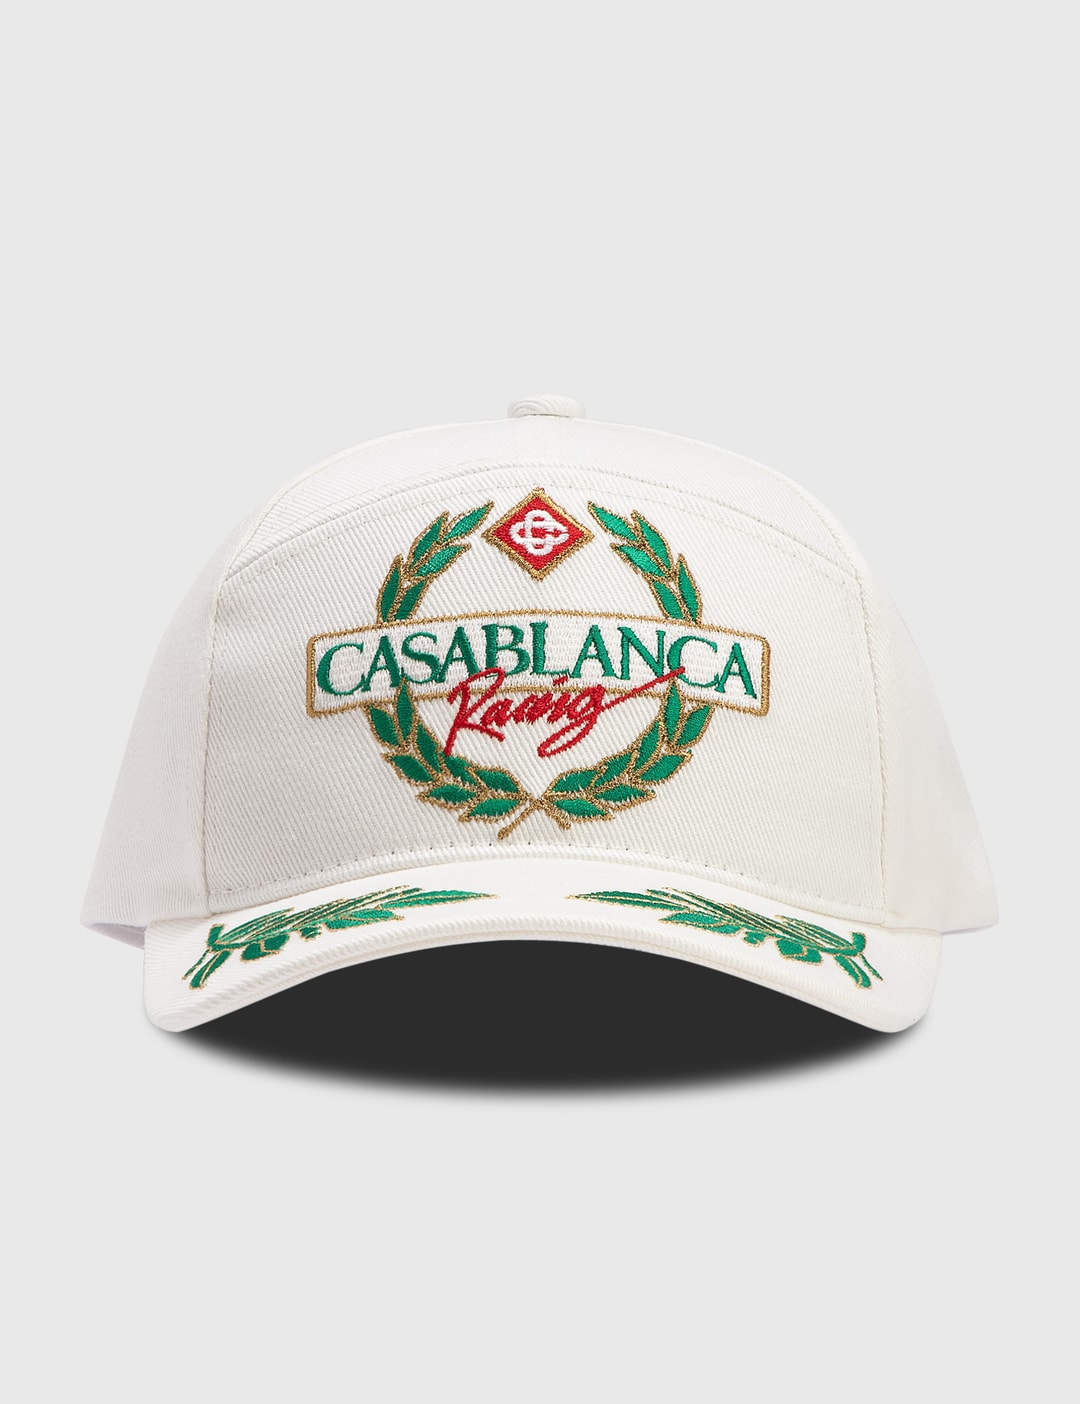 Casablanca - Casablanca Racing Twill Cap | HBX - Globally Curated ...